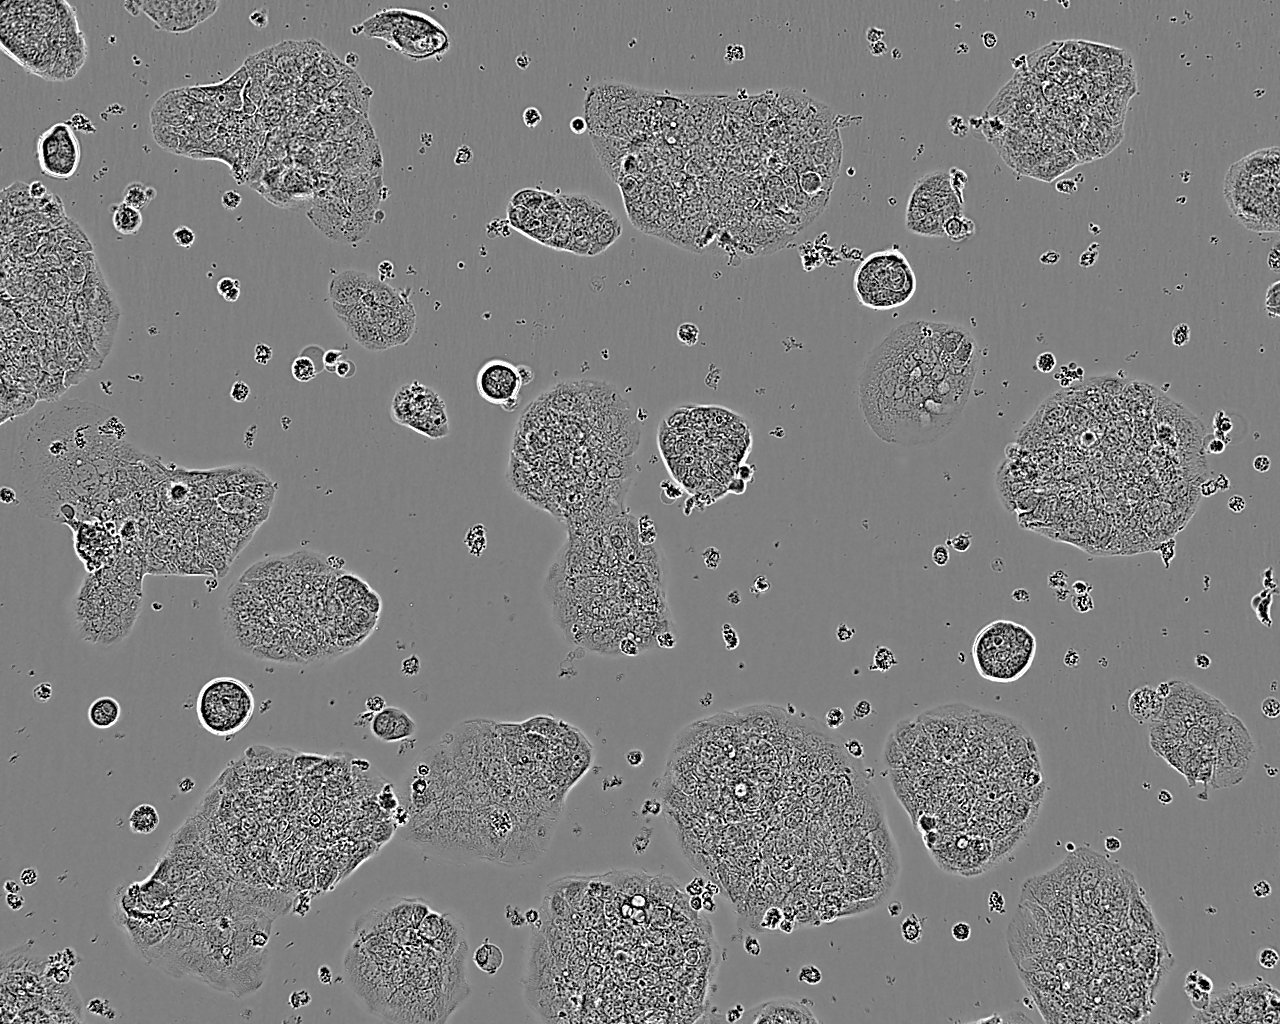 IOSE-29 Fresh Cells|人卵巢上皮细胞(送STR基因图谱),IOSE-29 Fresh Cells